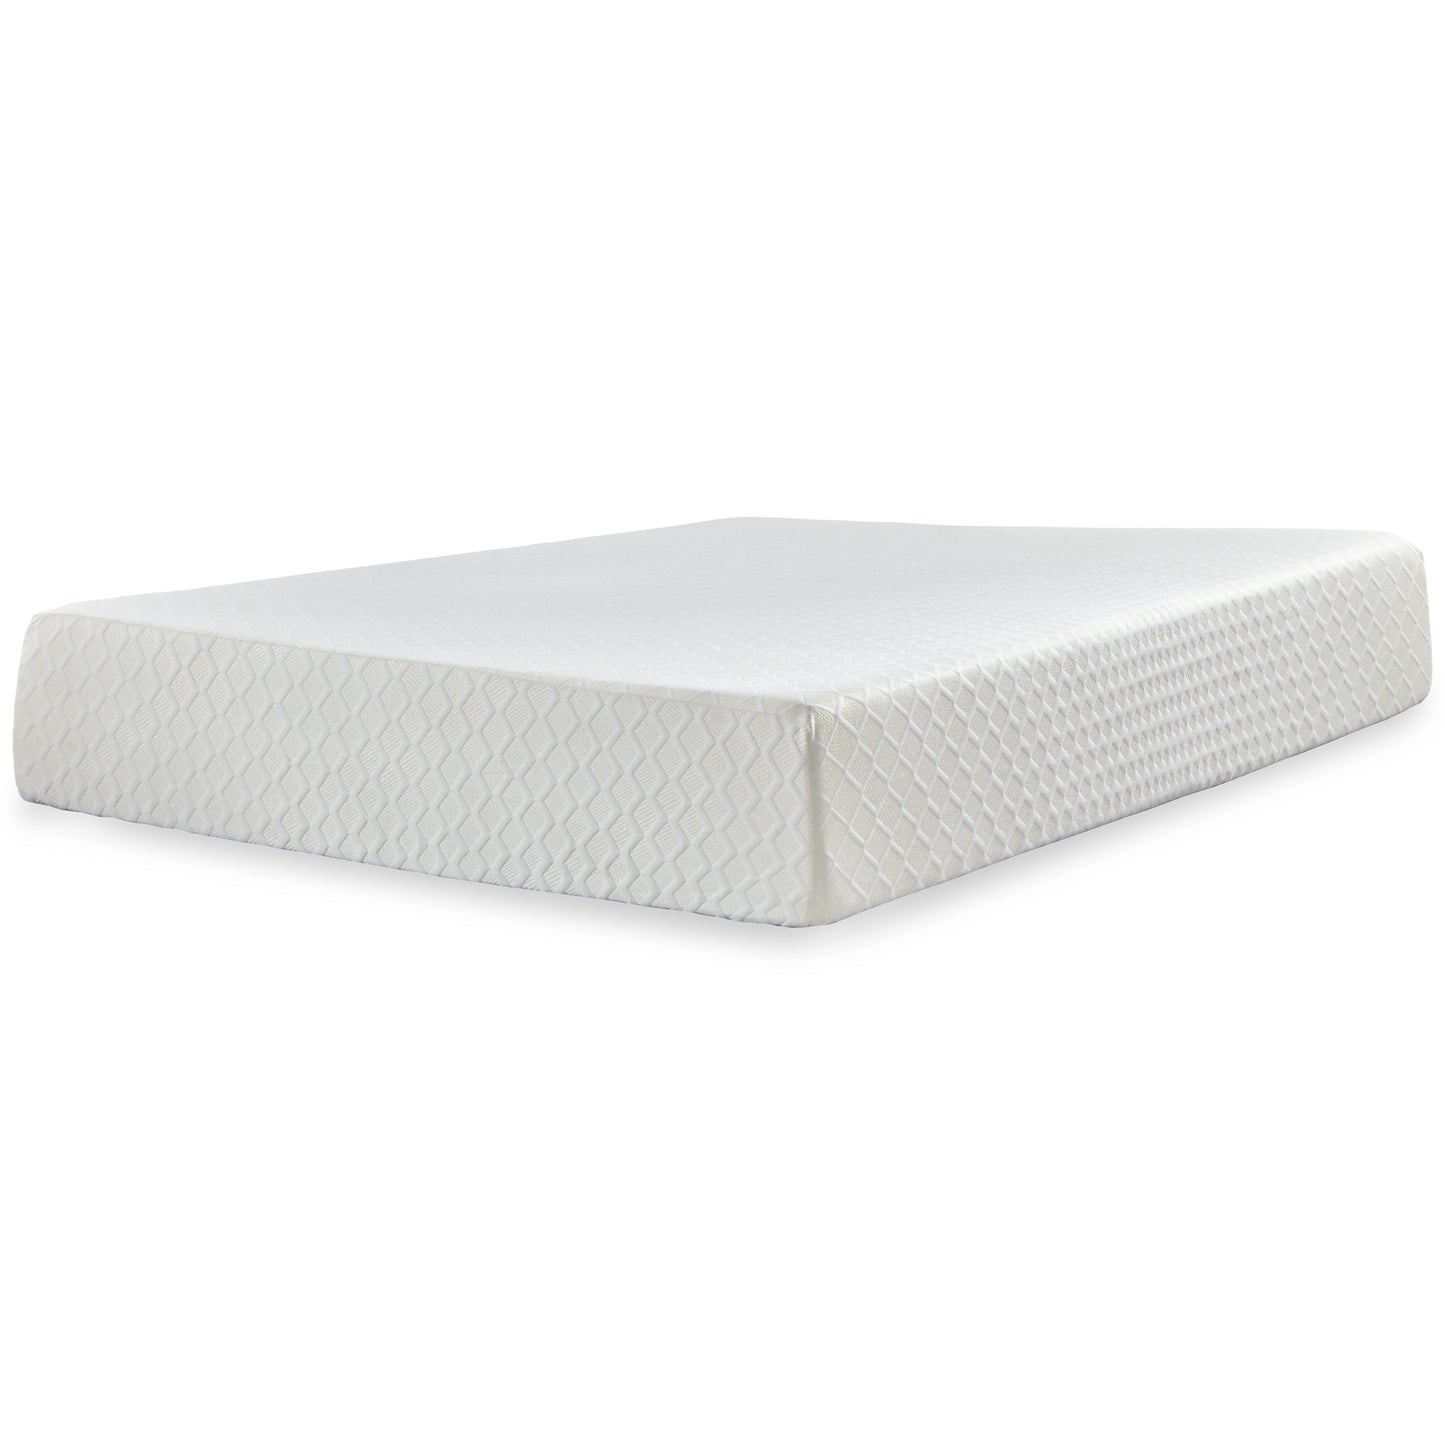 Chime 12 Inch Memory Foam Mattress with Adjustable Base Sierra Sleep® by Ashley